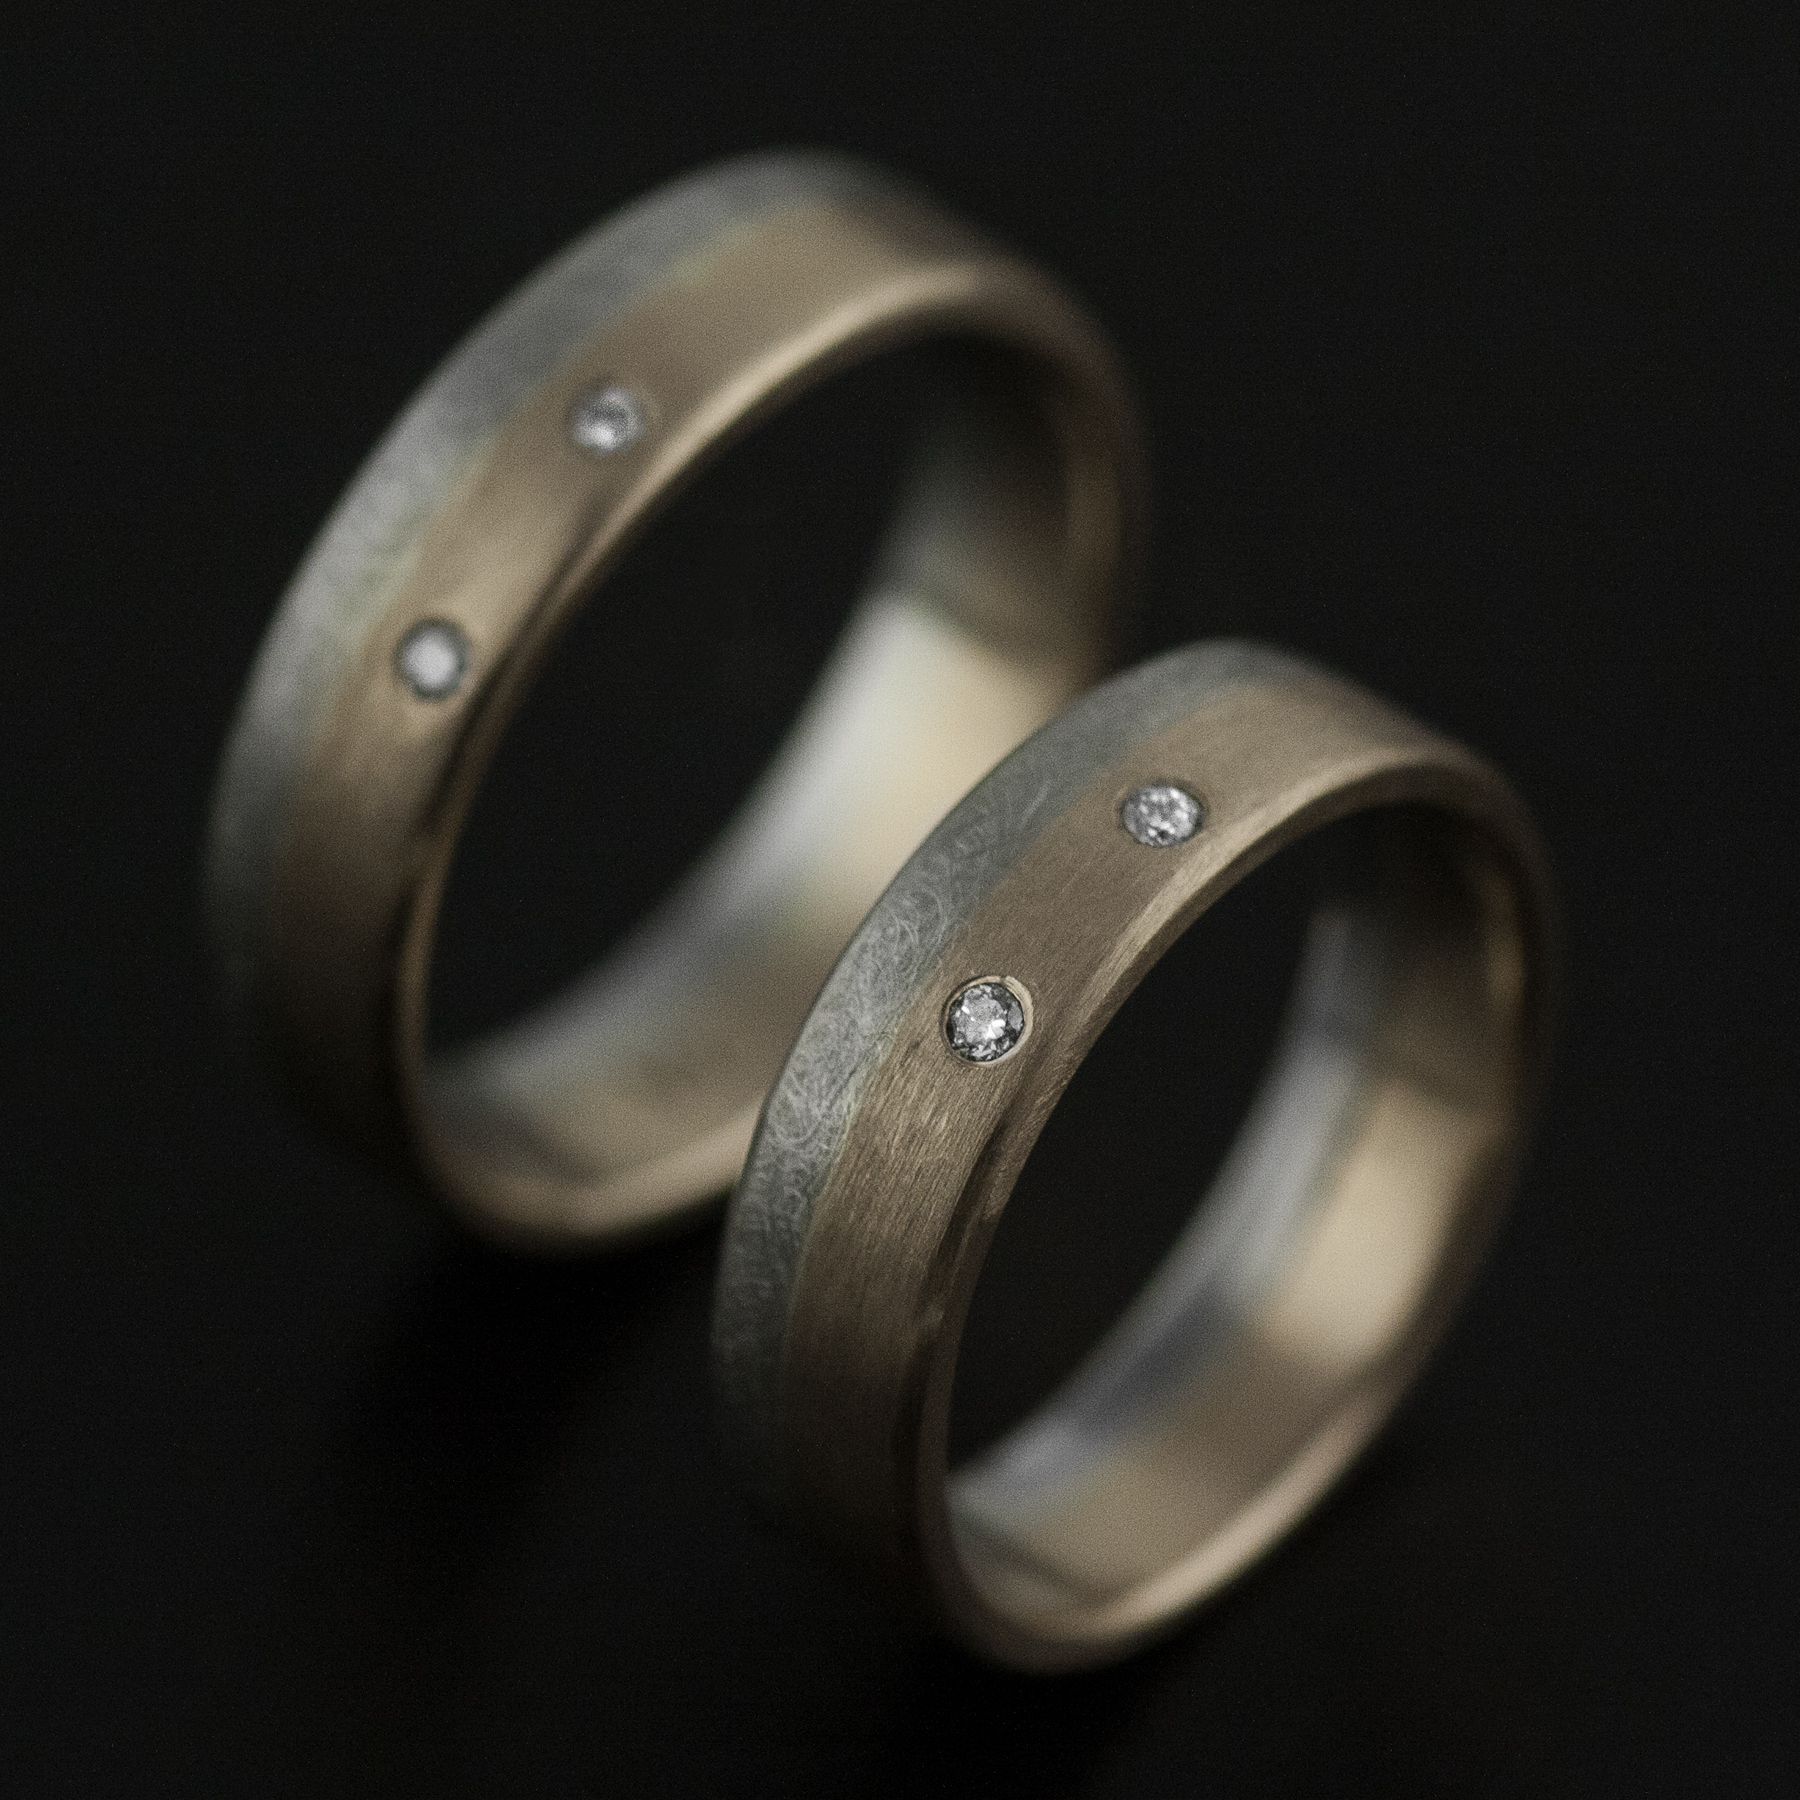 platinum and rose gold wedding ring set custom vk designs jewelry bespoke portland hand made